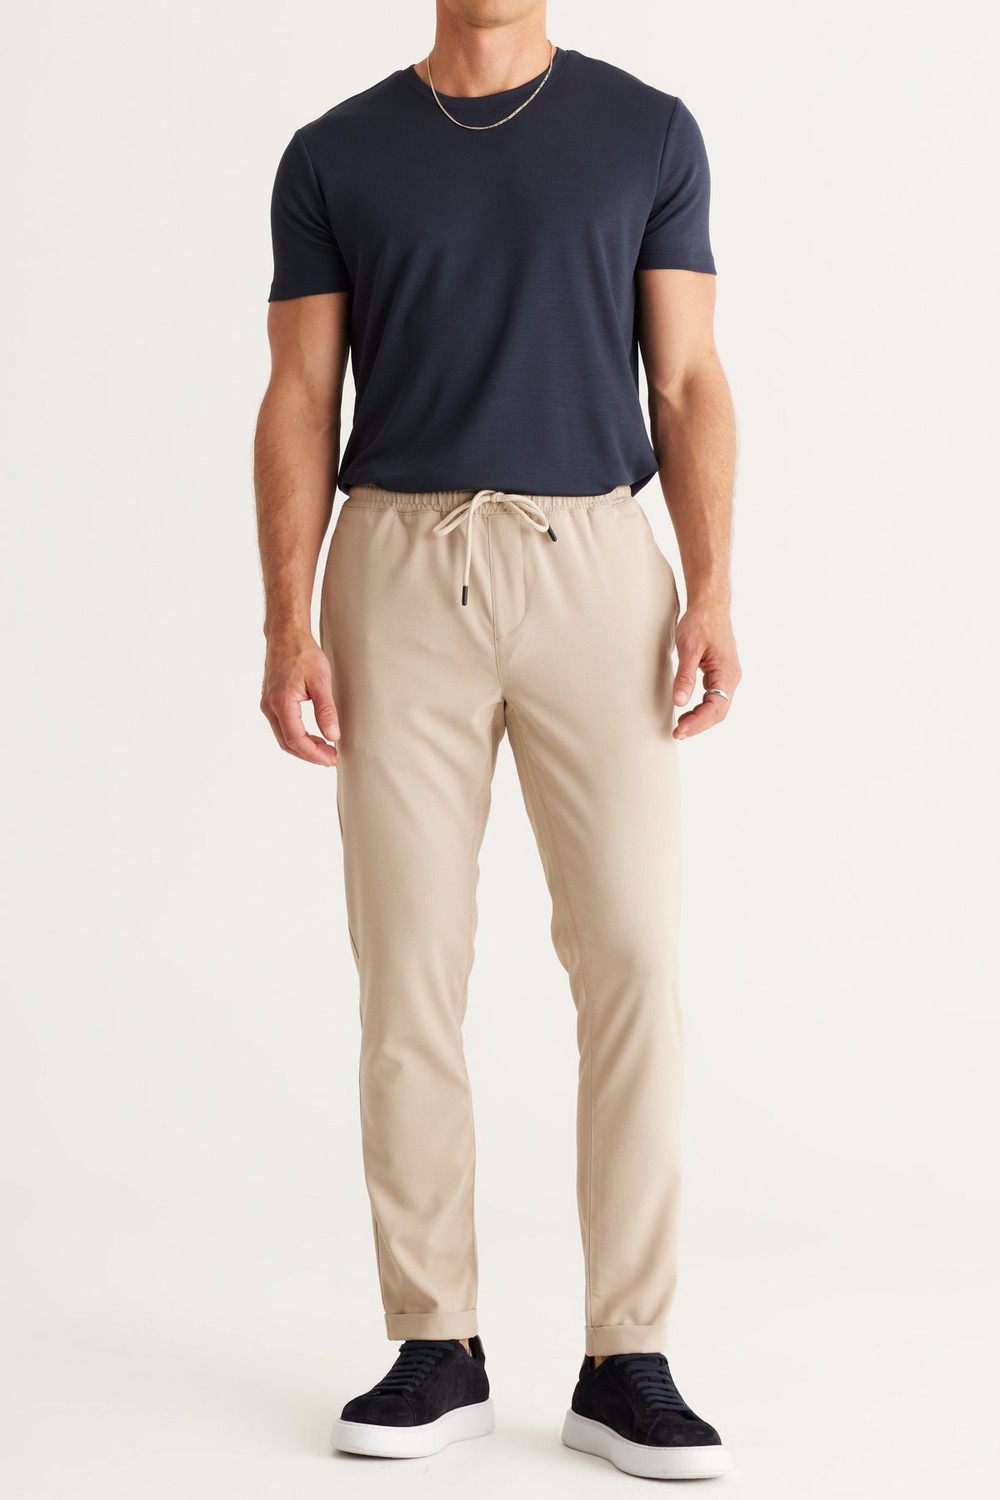 AC&Co / Altınyıldız Classics Men's Beige Slim Fit Casual Cut Jogger Pants with Tie Waist Side Pockets.